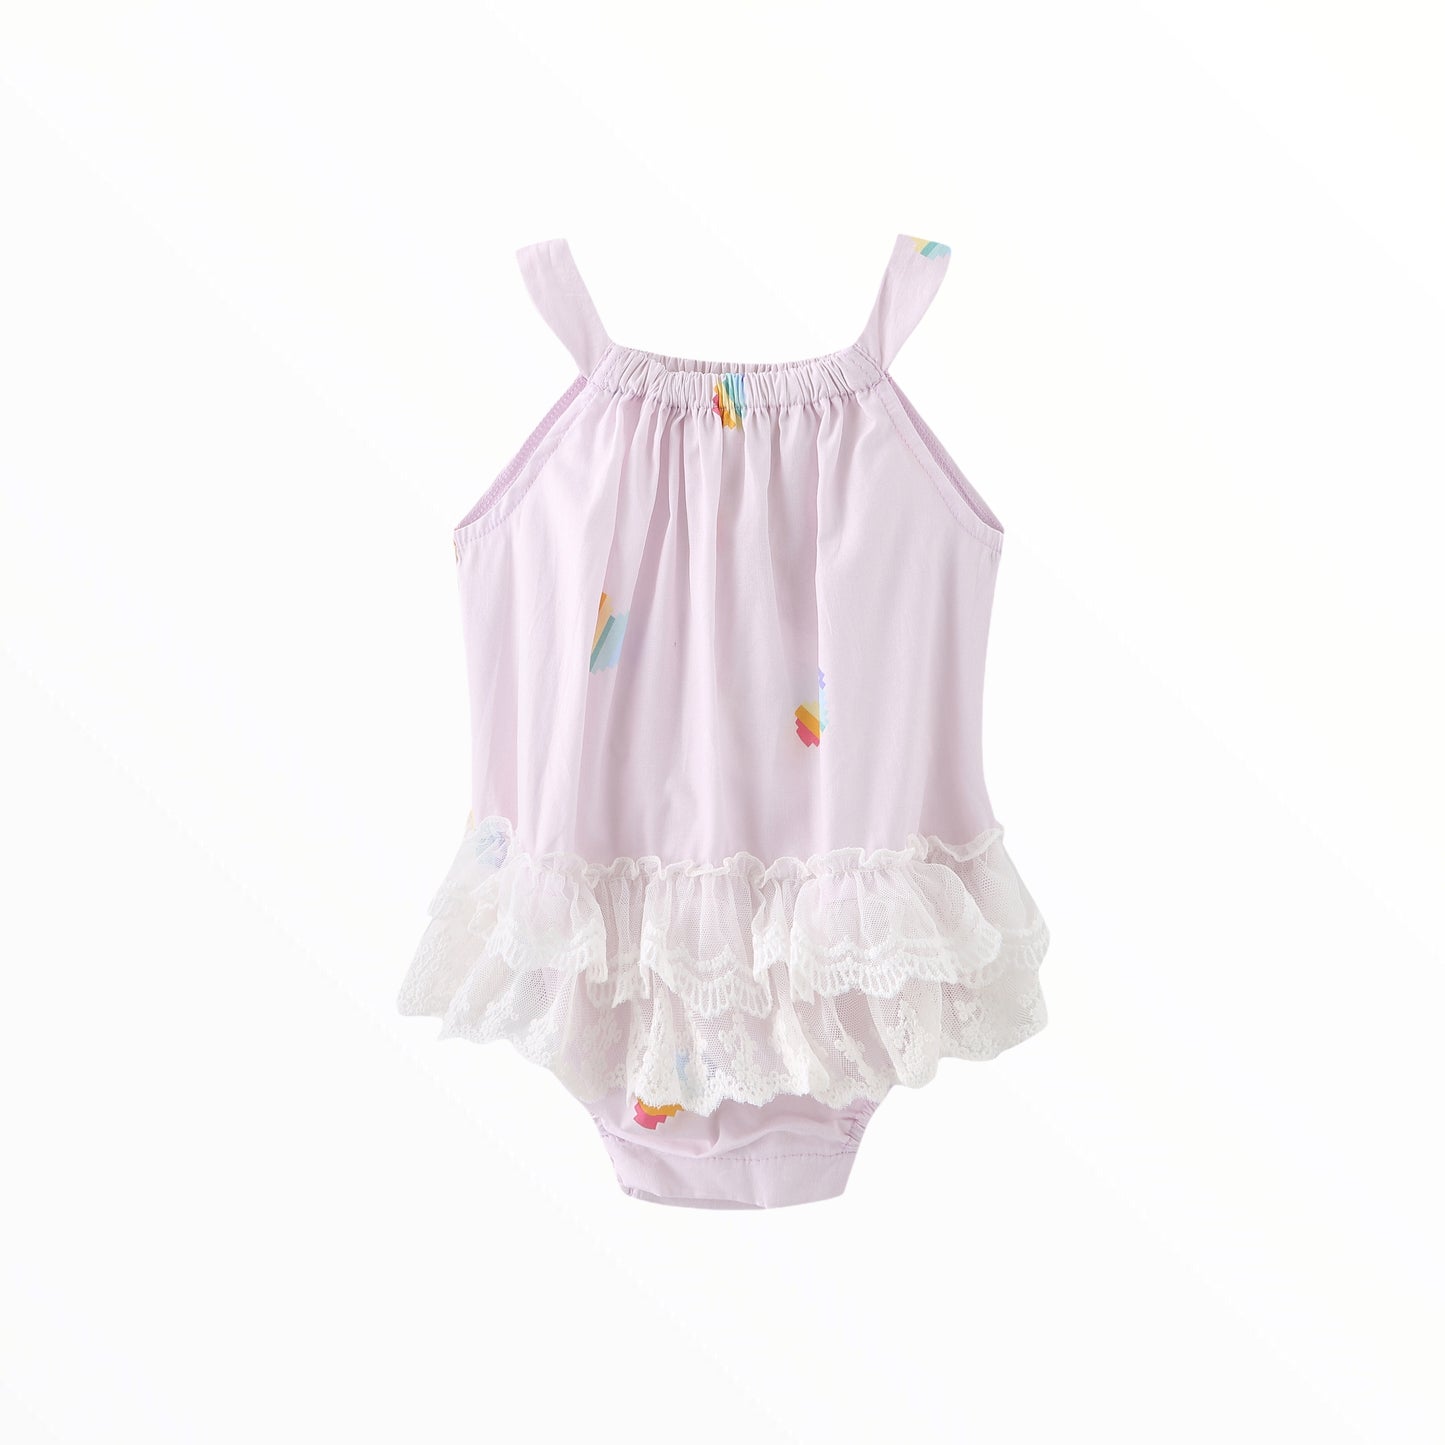 iMiN Kids Organic Cotton Lace Baby Romper Pink Rainbow Heart